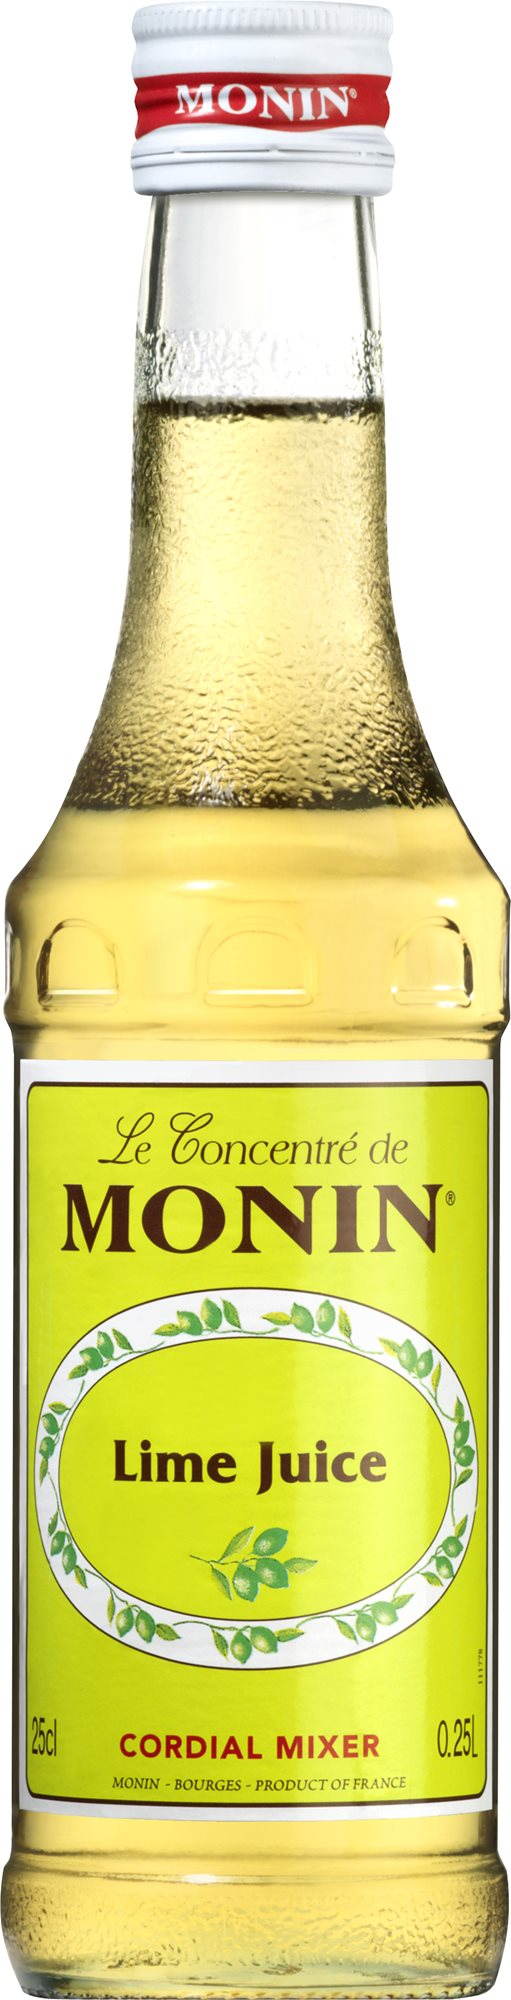 Monin Lime Juice 0.25l